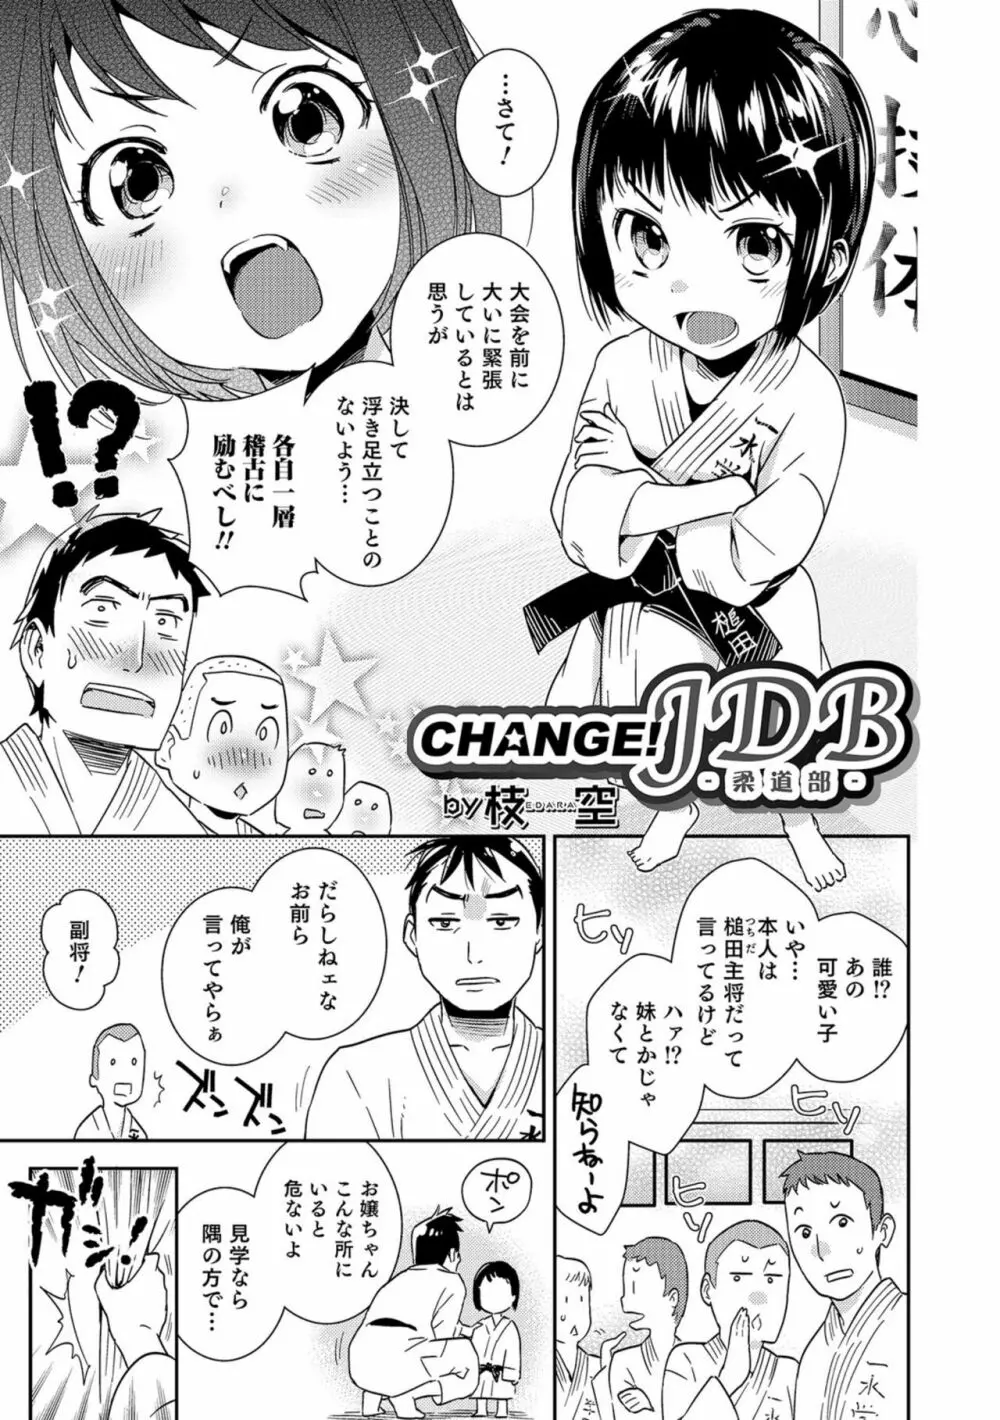 CHANGE!JDB -稾道部- 1ページ